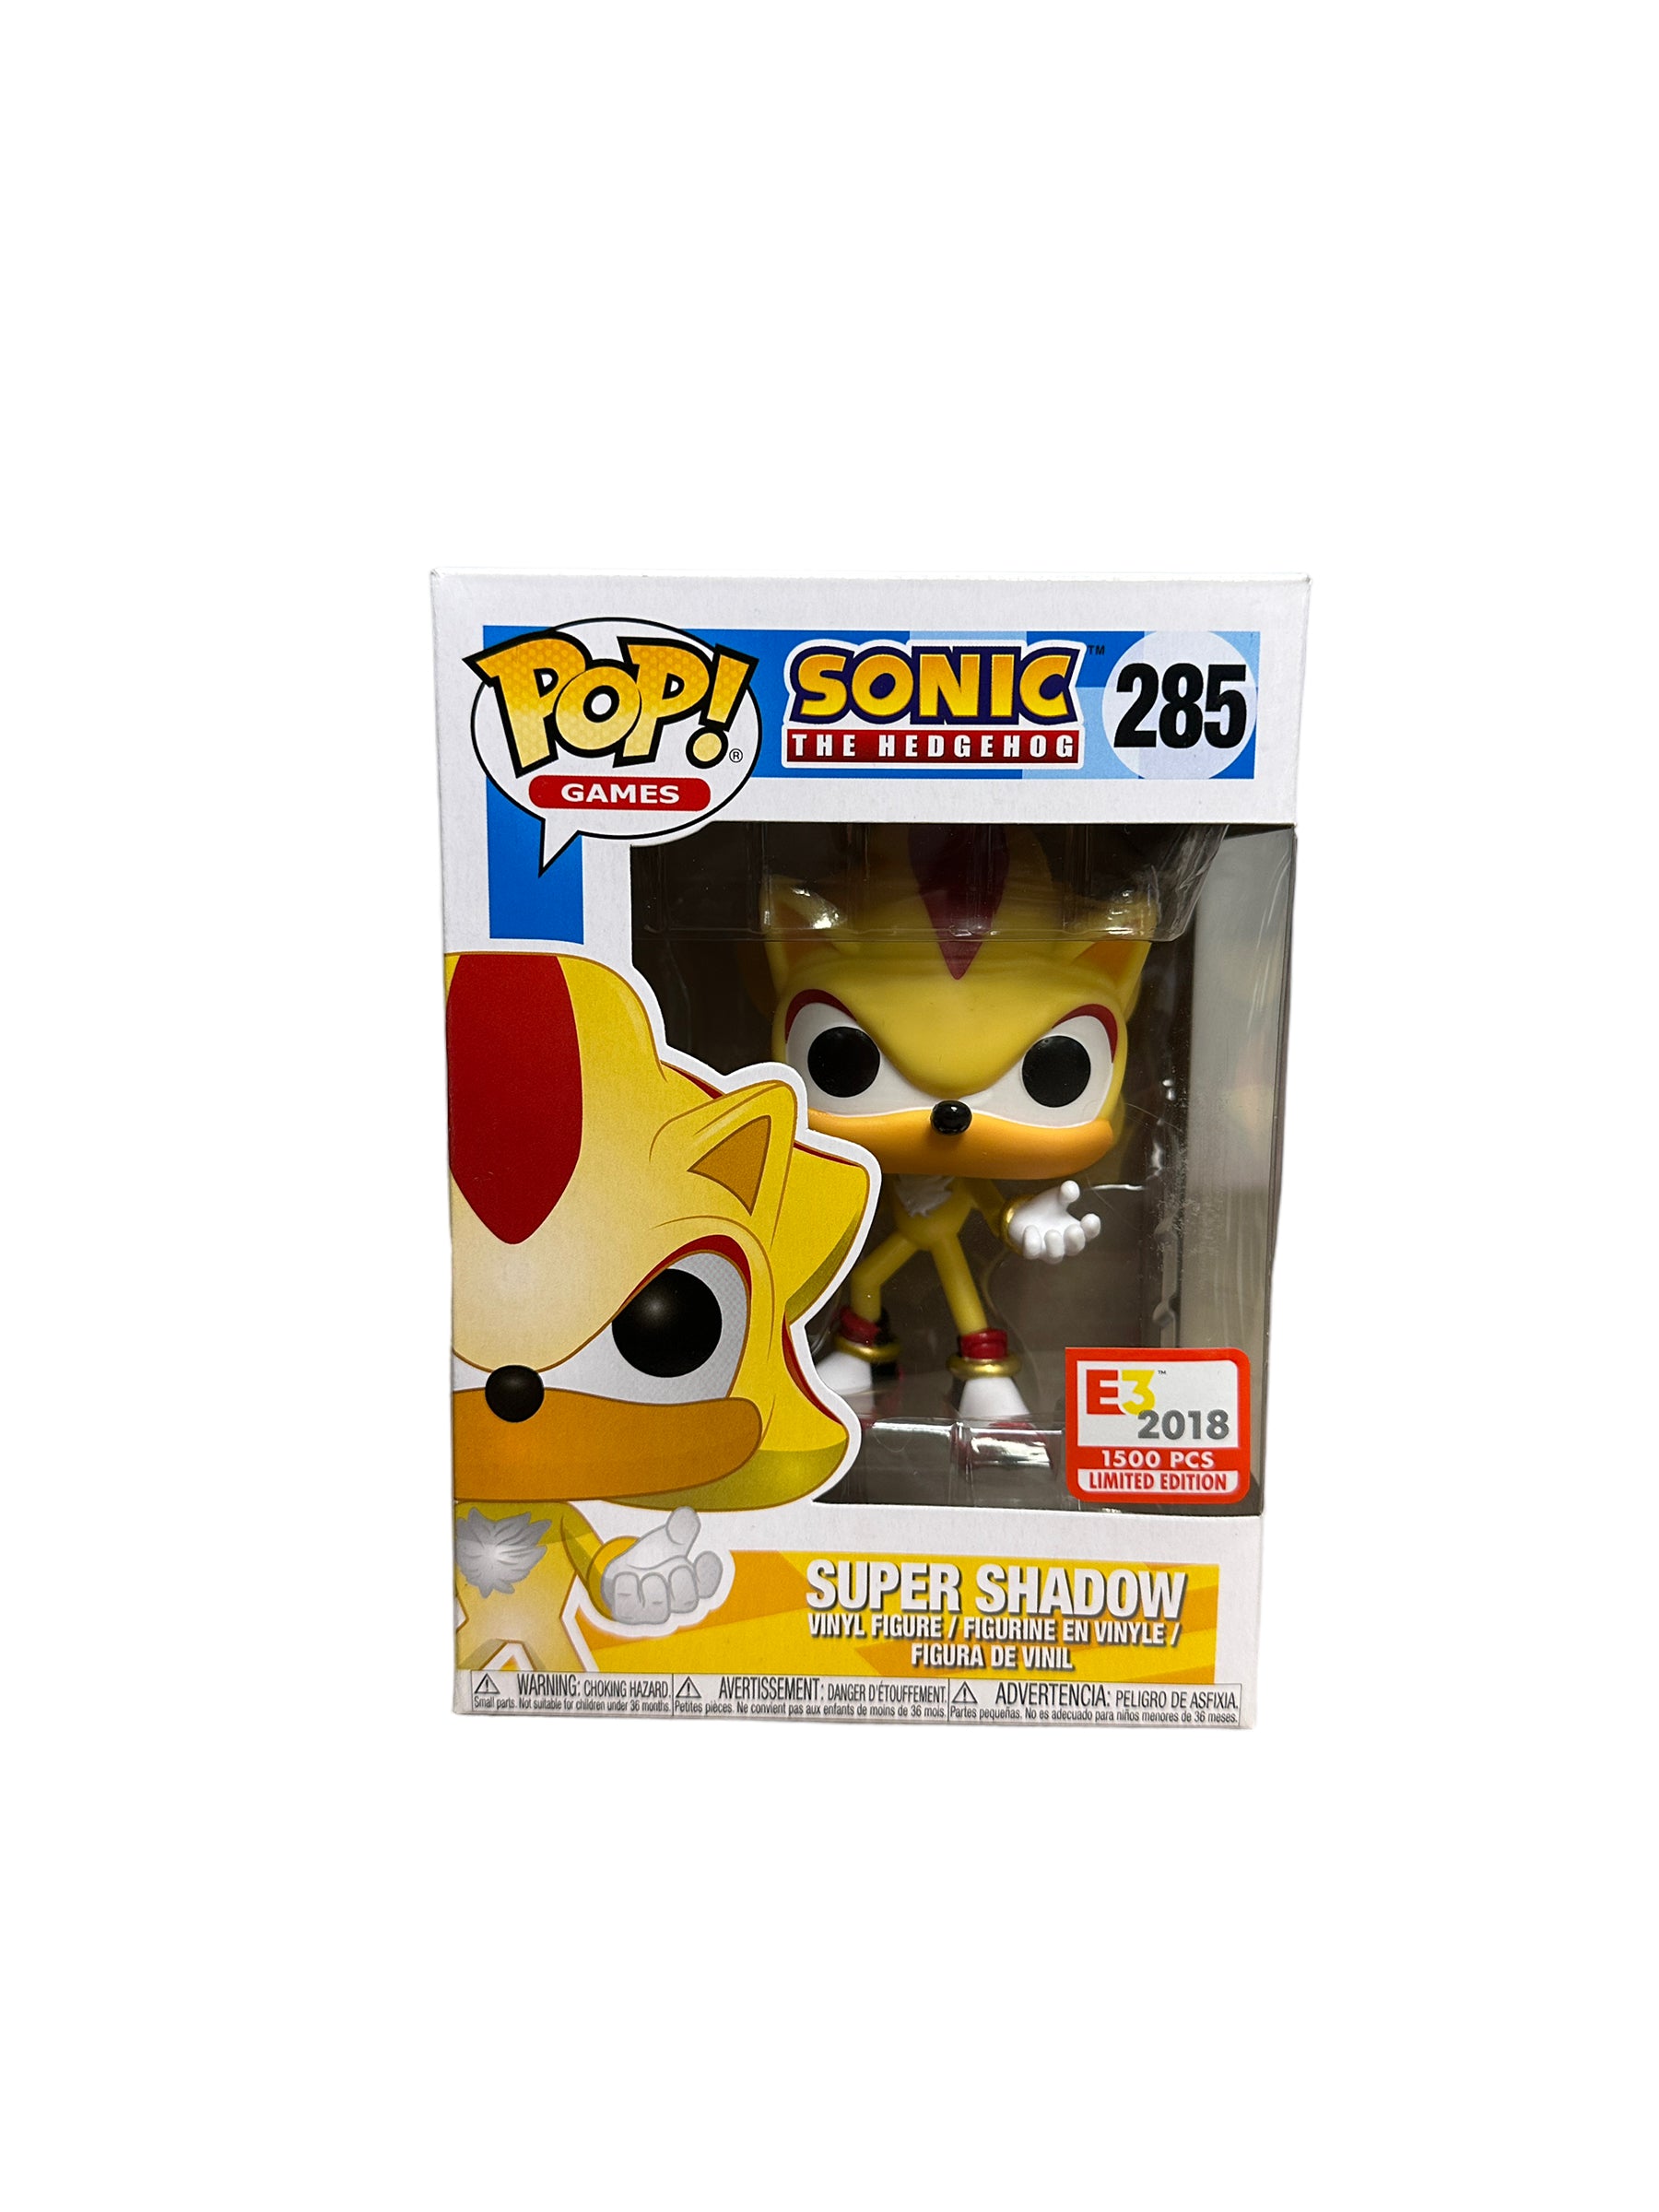 Super Shadow #285 Funko Pop! - Sonic The Hedgehog - E3 2018 Exclusive LE1500 Pcs - Condition 8/10